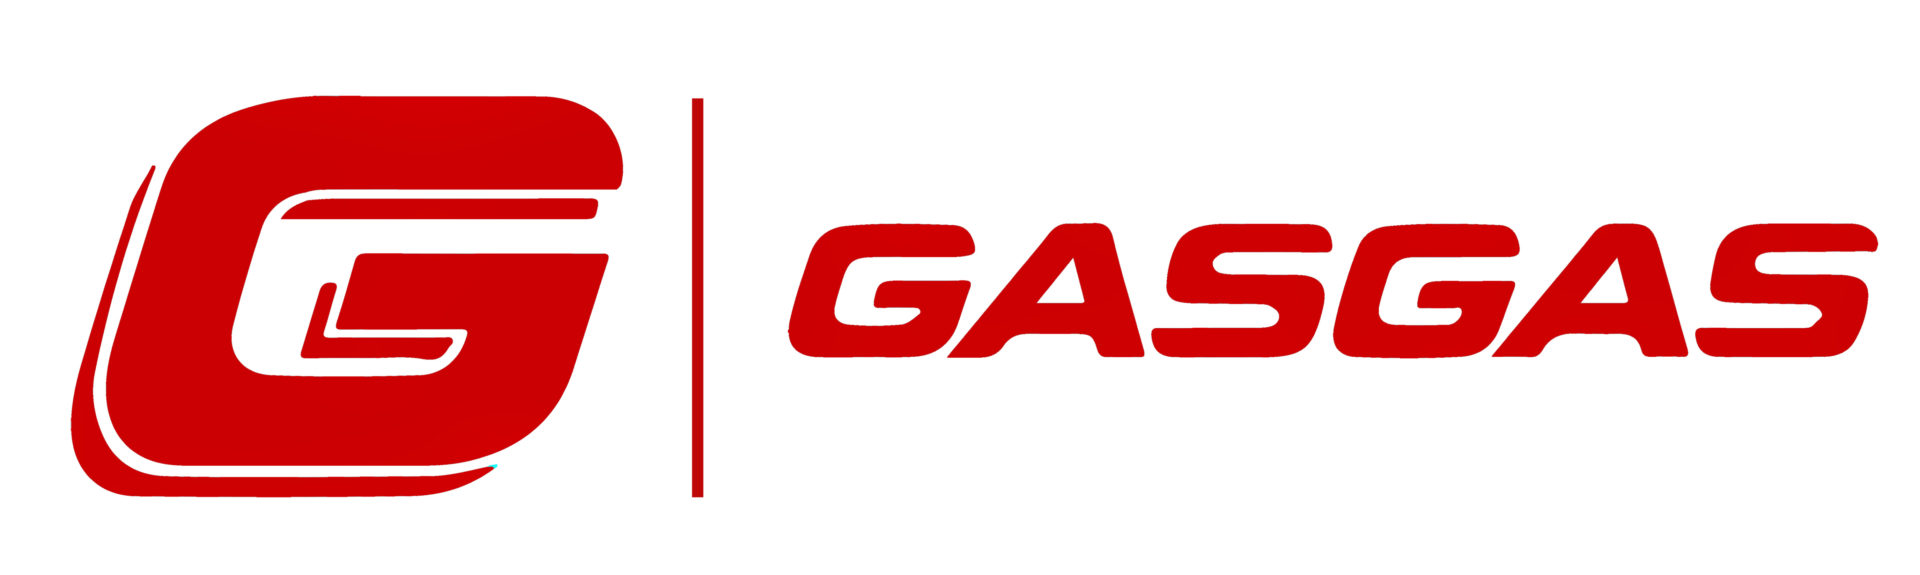 Gas Gas logo motorcycles